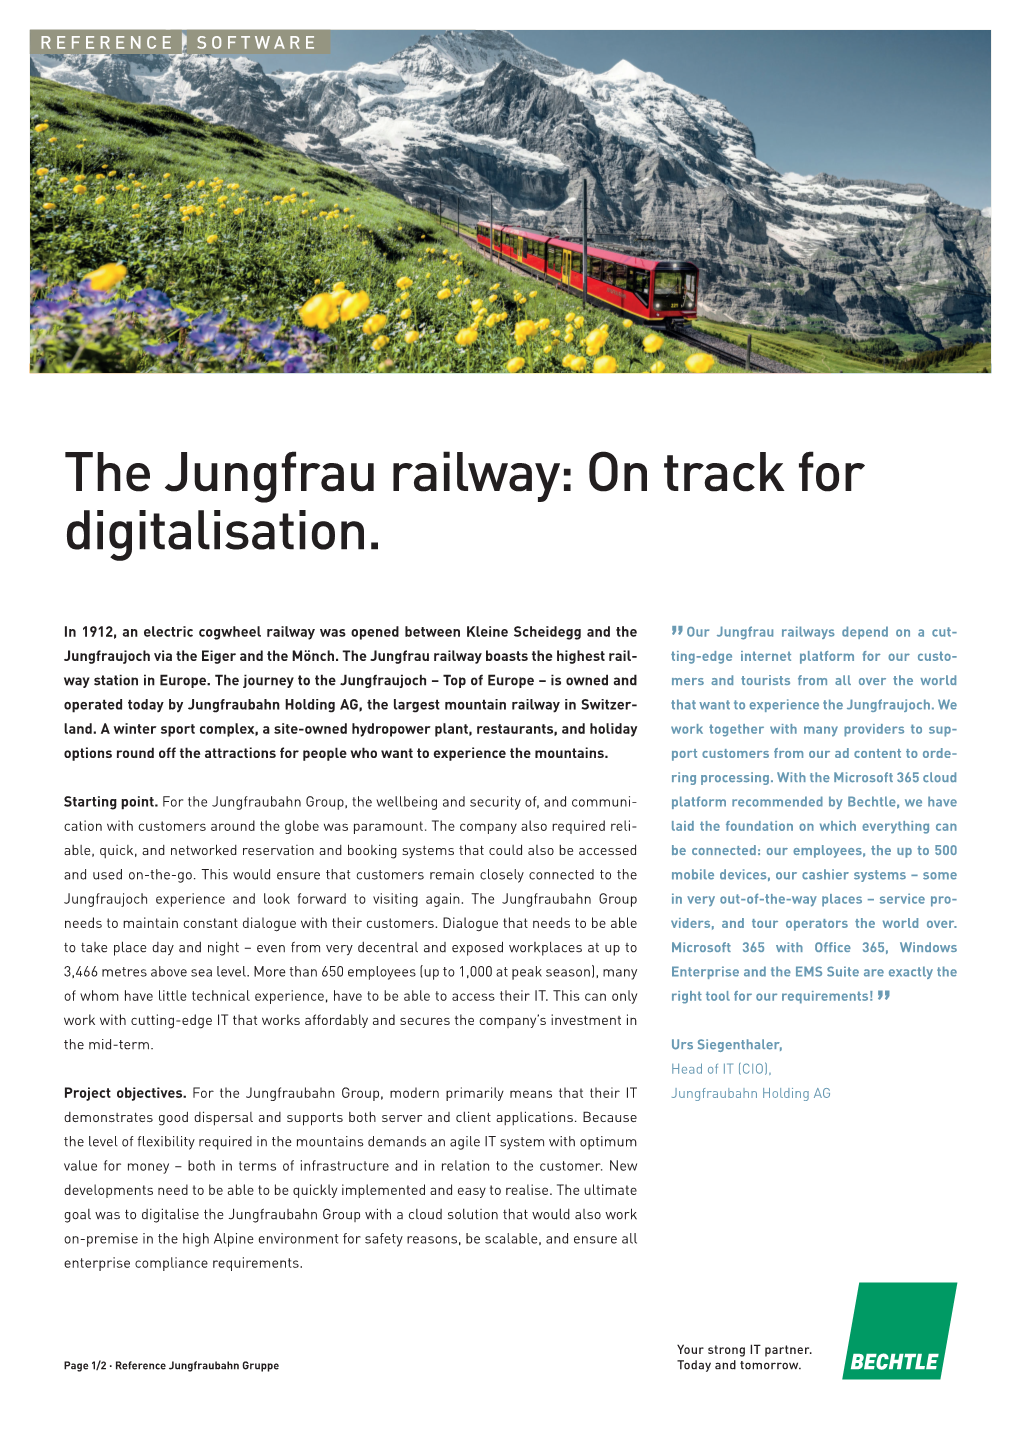 The Jungfrau Railway: on Track for Digitalisation